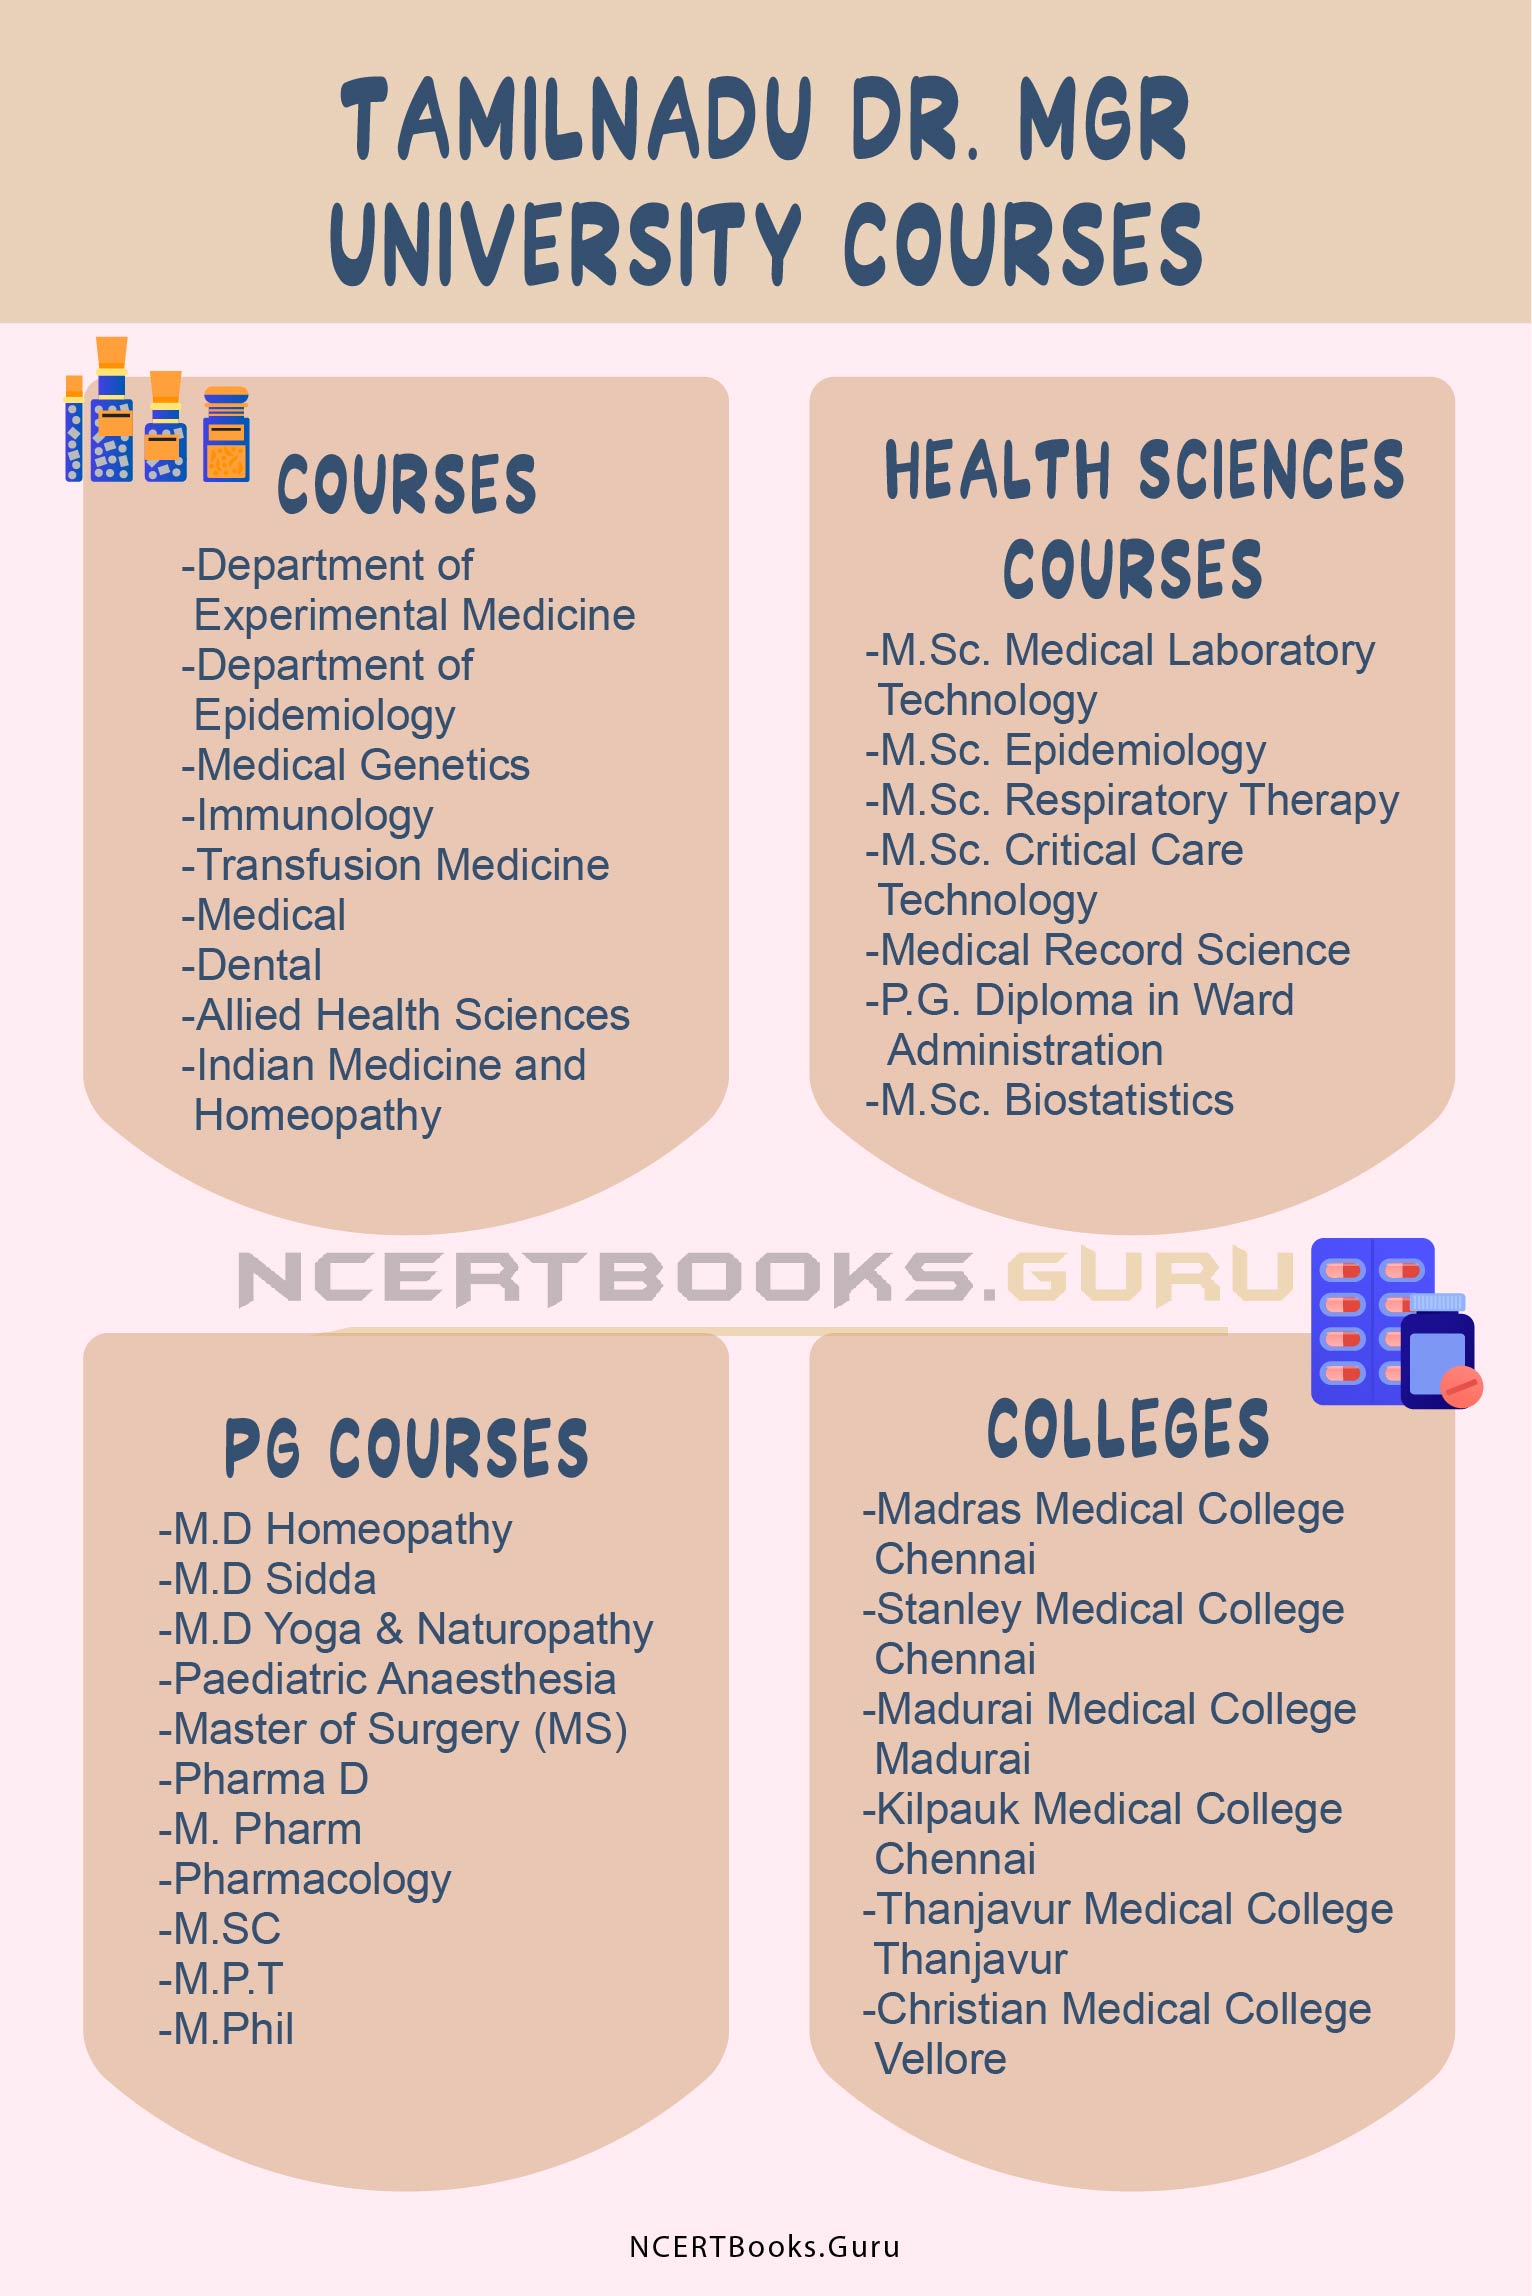 Tamilnadu Dr. MGR University Courses